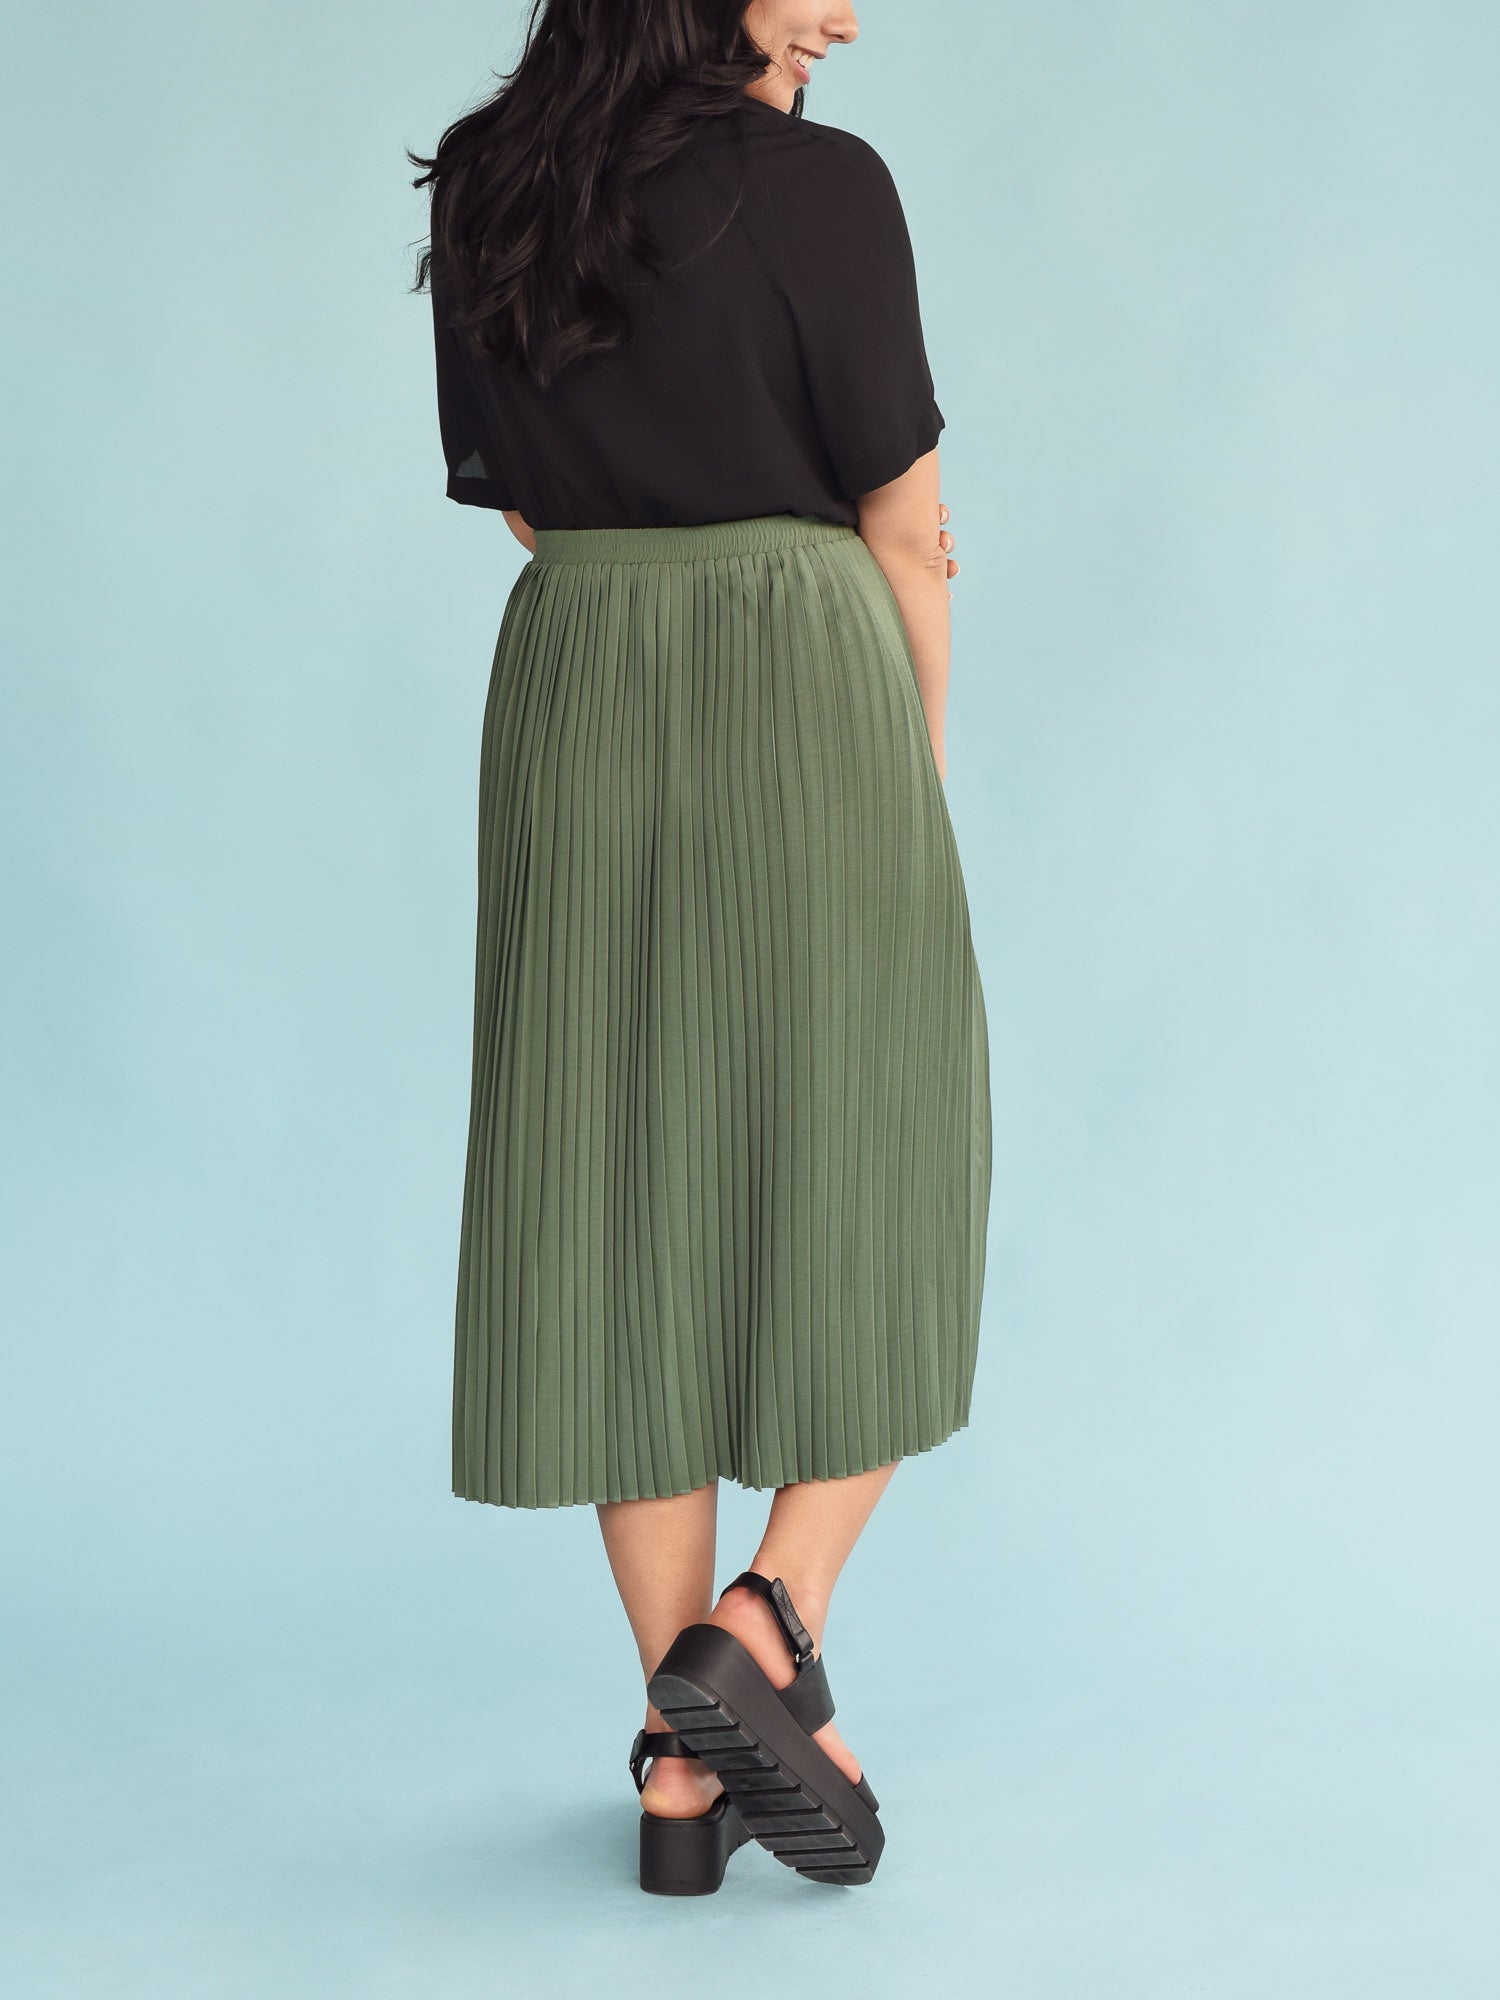 Women's pleated skirt green sage